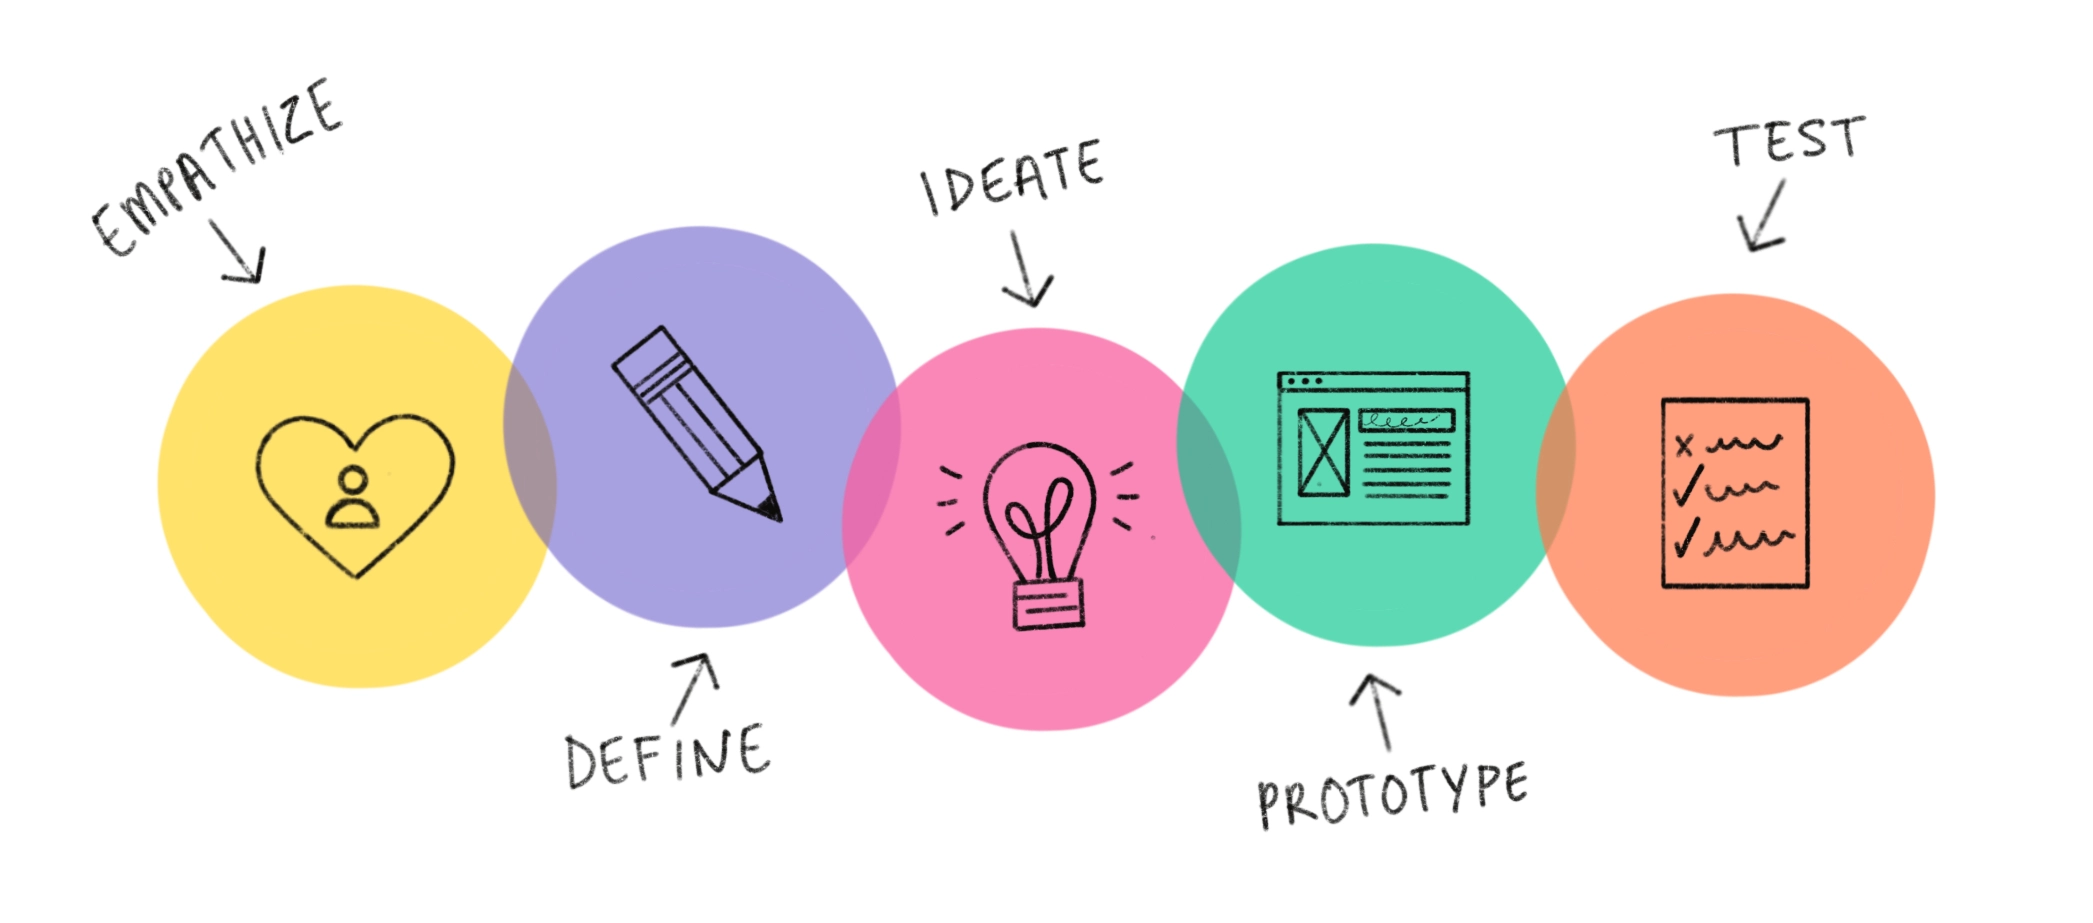 The Design thinking process